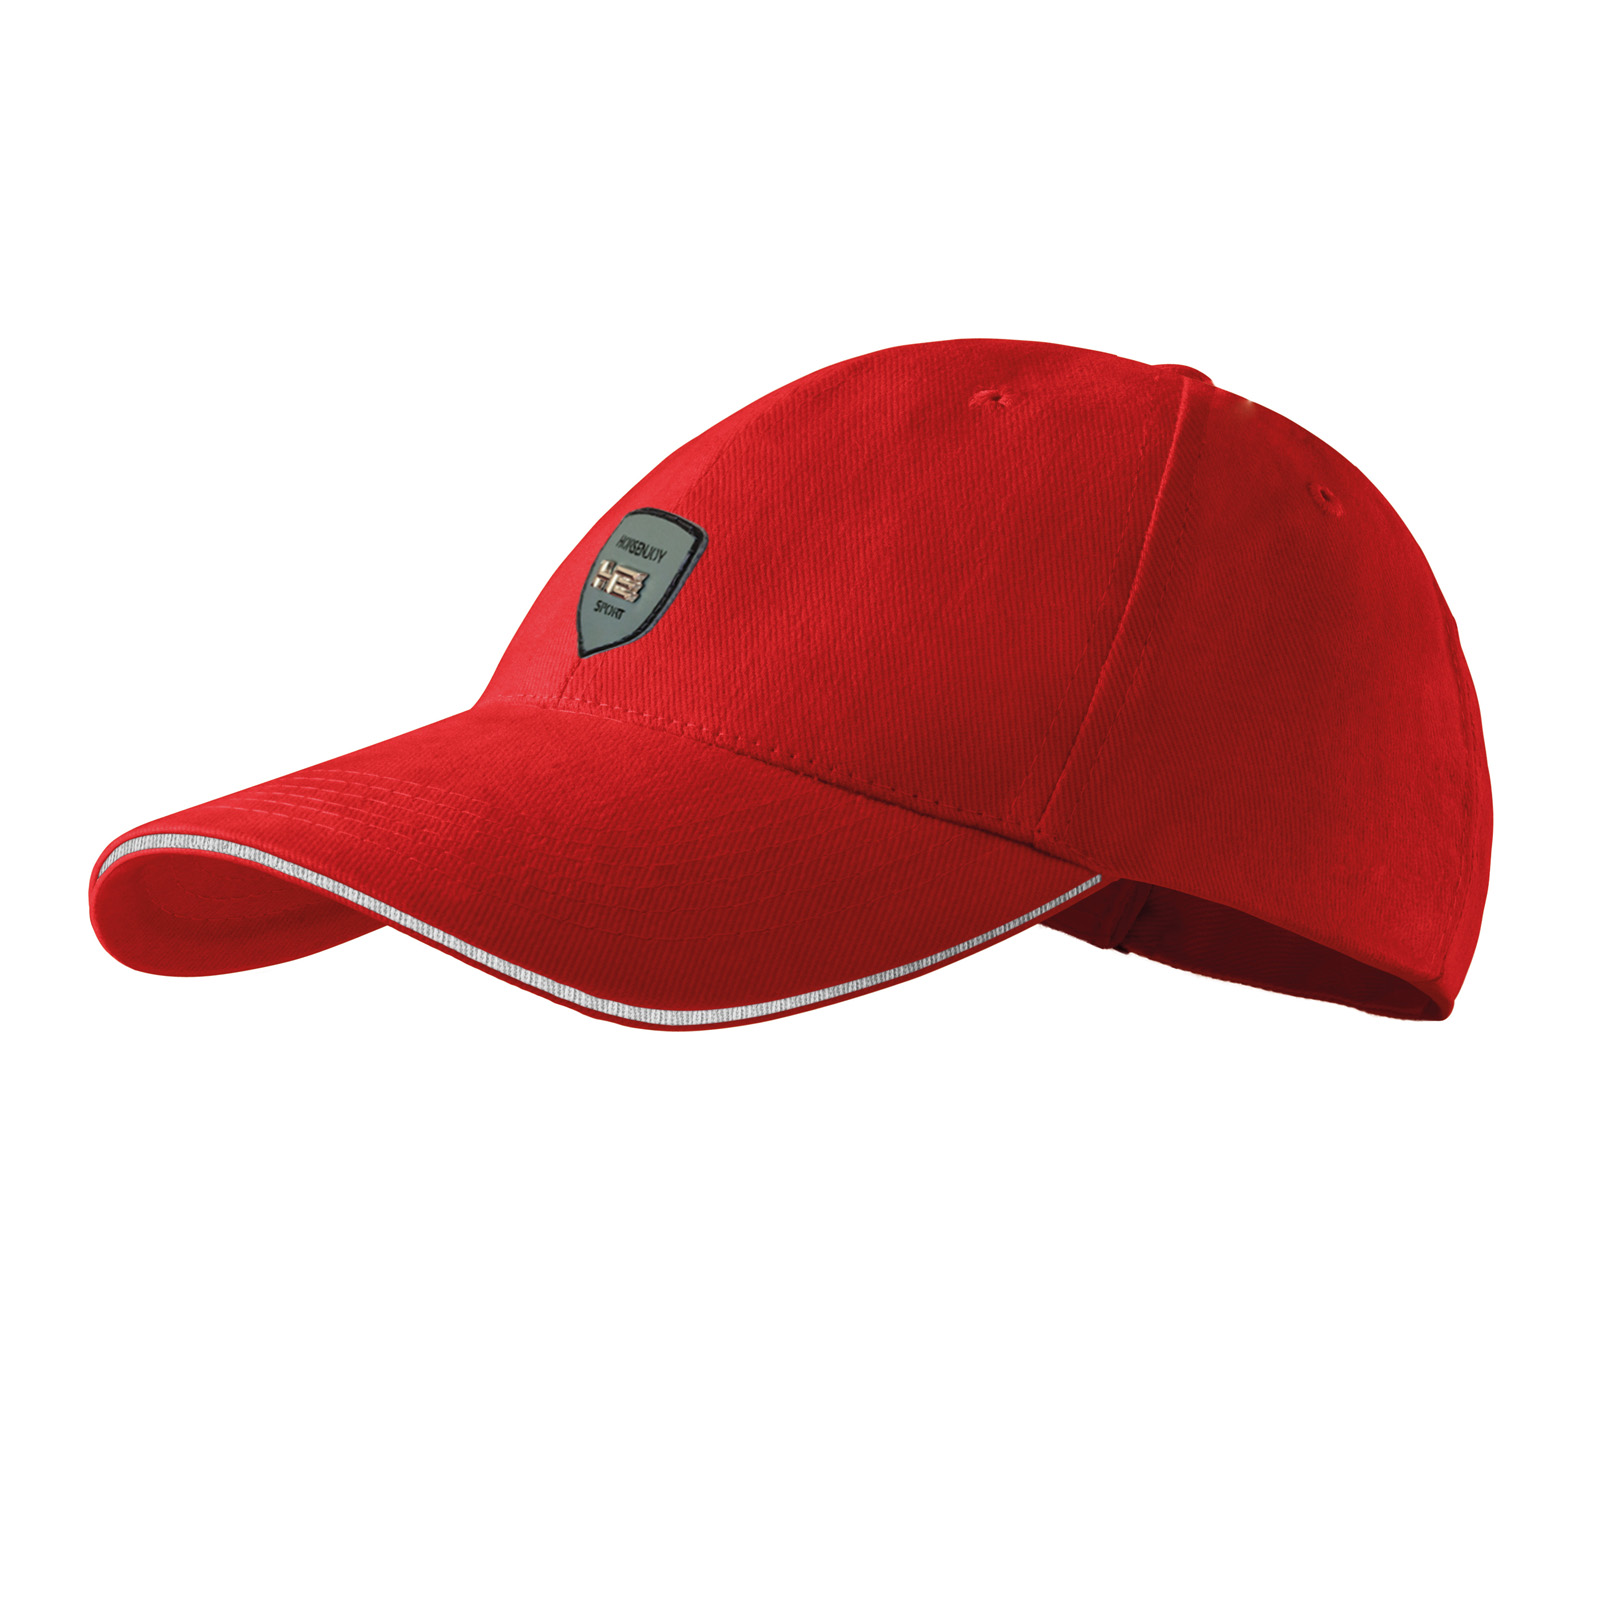 Baseball Kappe Horsenjoy Stirnbänder Caps Focus MODERACJA SEO \\ \\ dziale rot zmienisz | sklepu Sport w Caps Mützen, REITER Tytuł | \\ 